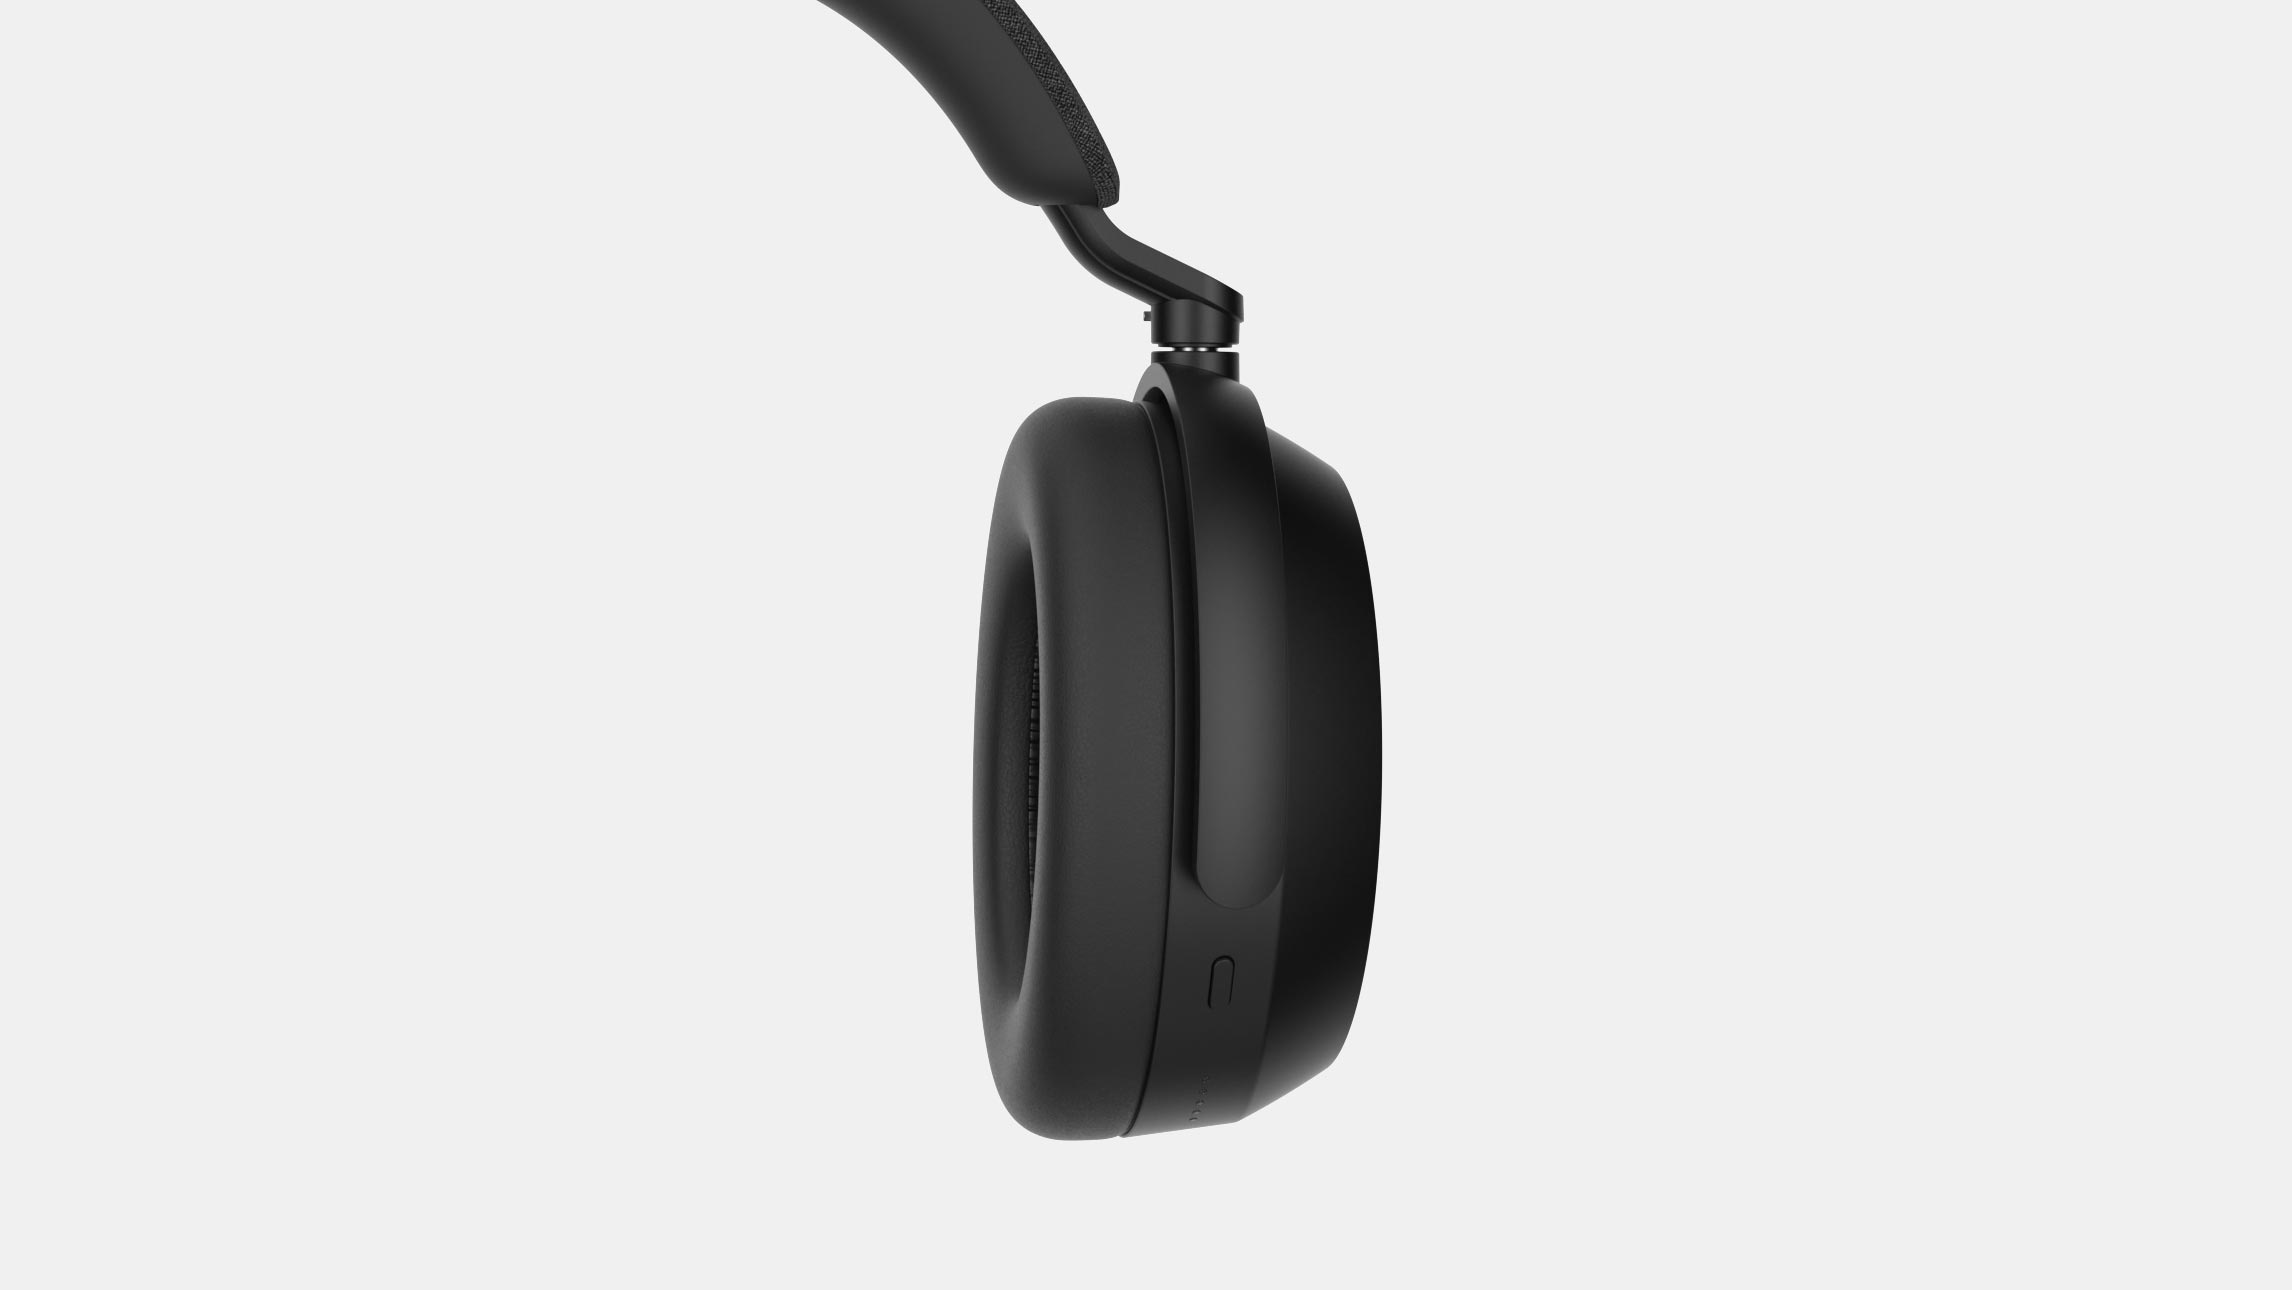 30% off pre-order of sennheiser momentum 4 wireless bluetooth headphones  $244.96